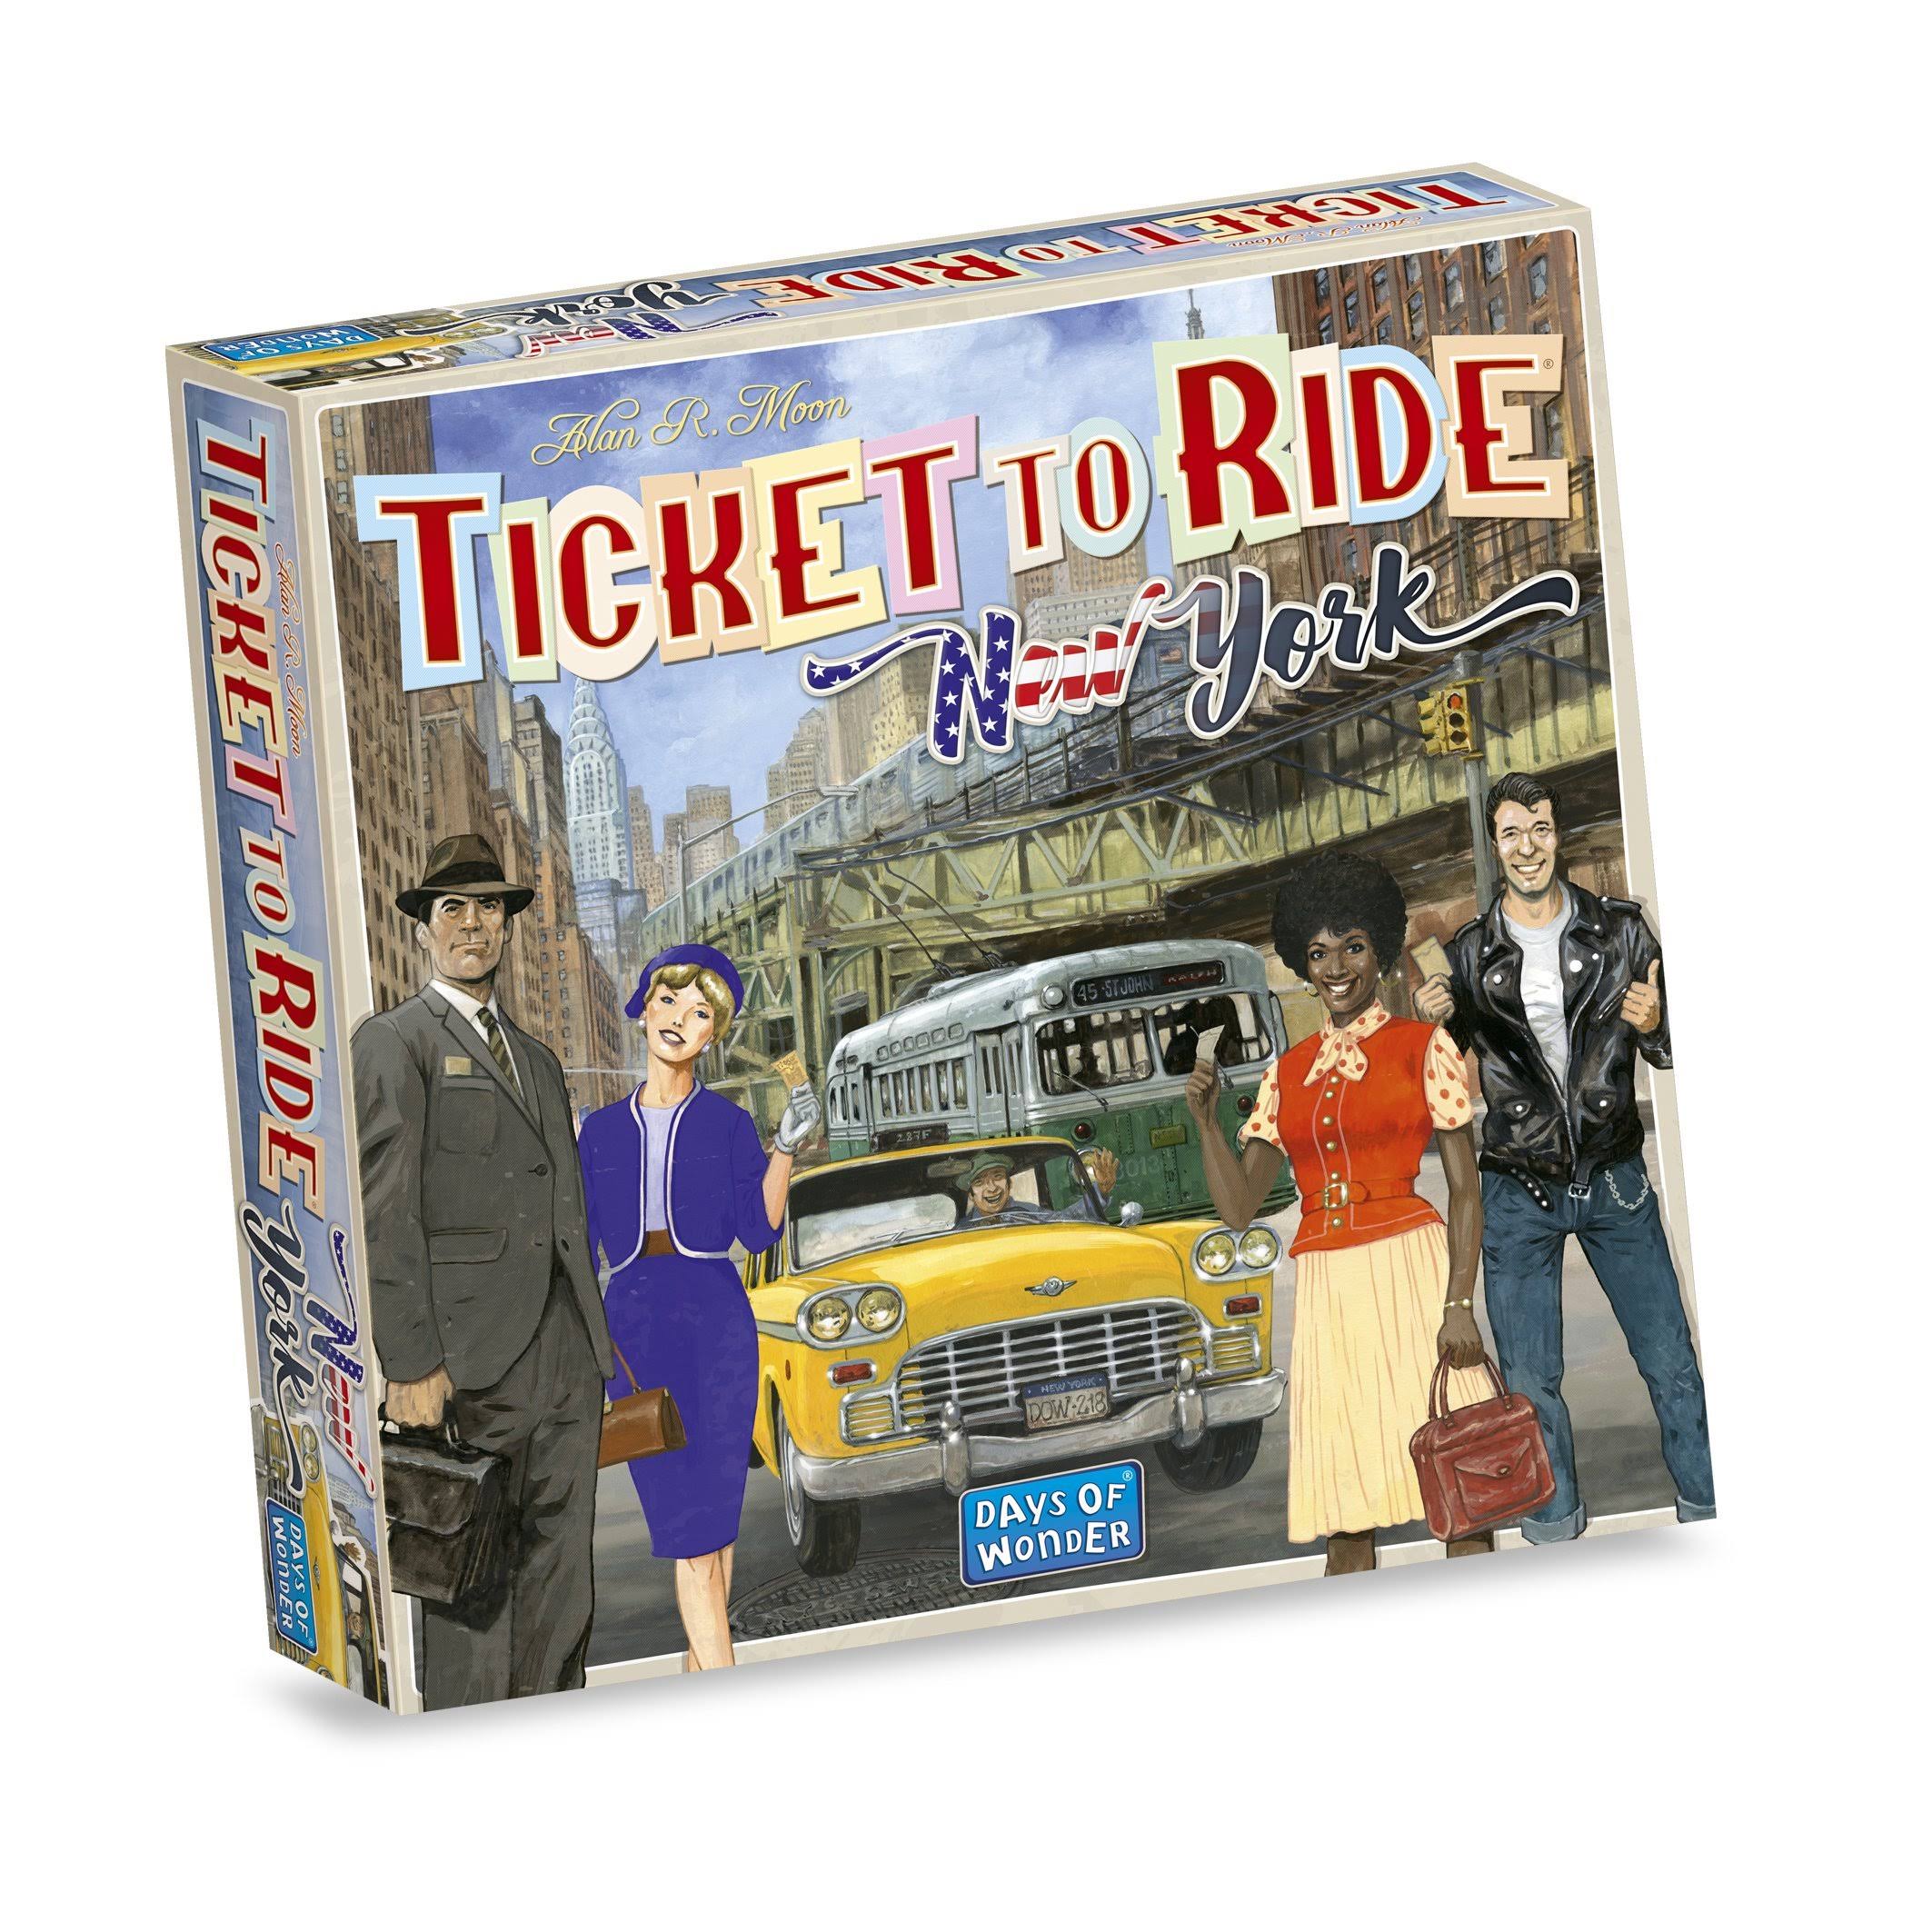 Ticket to Ride New York - Days of Wonder - Board Game